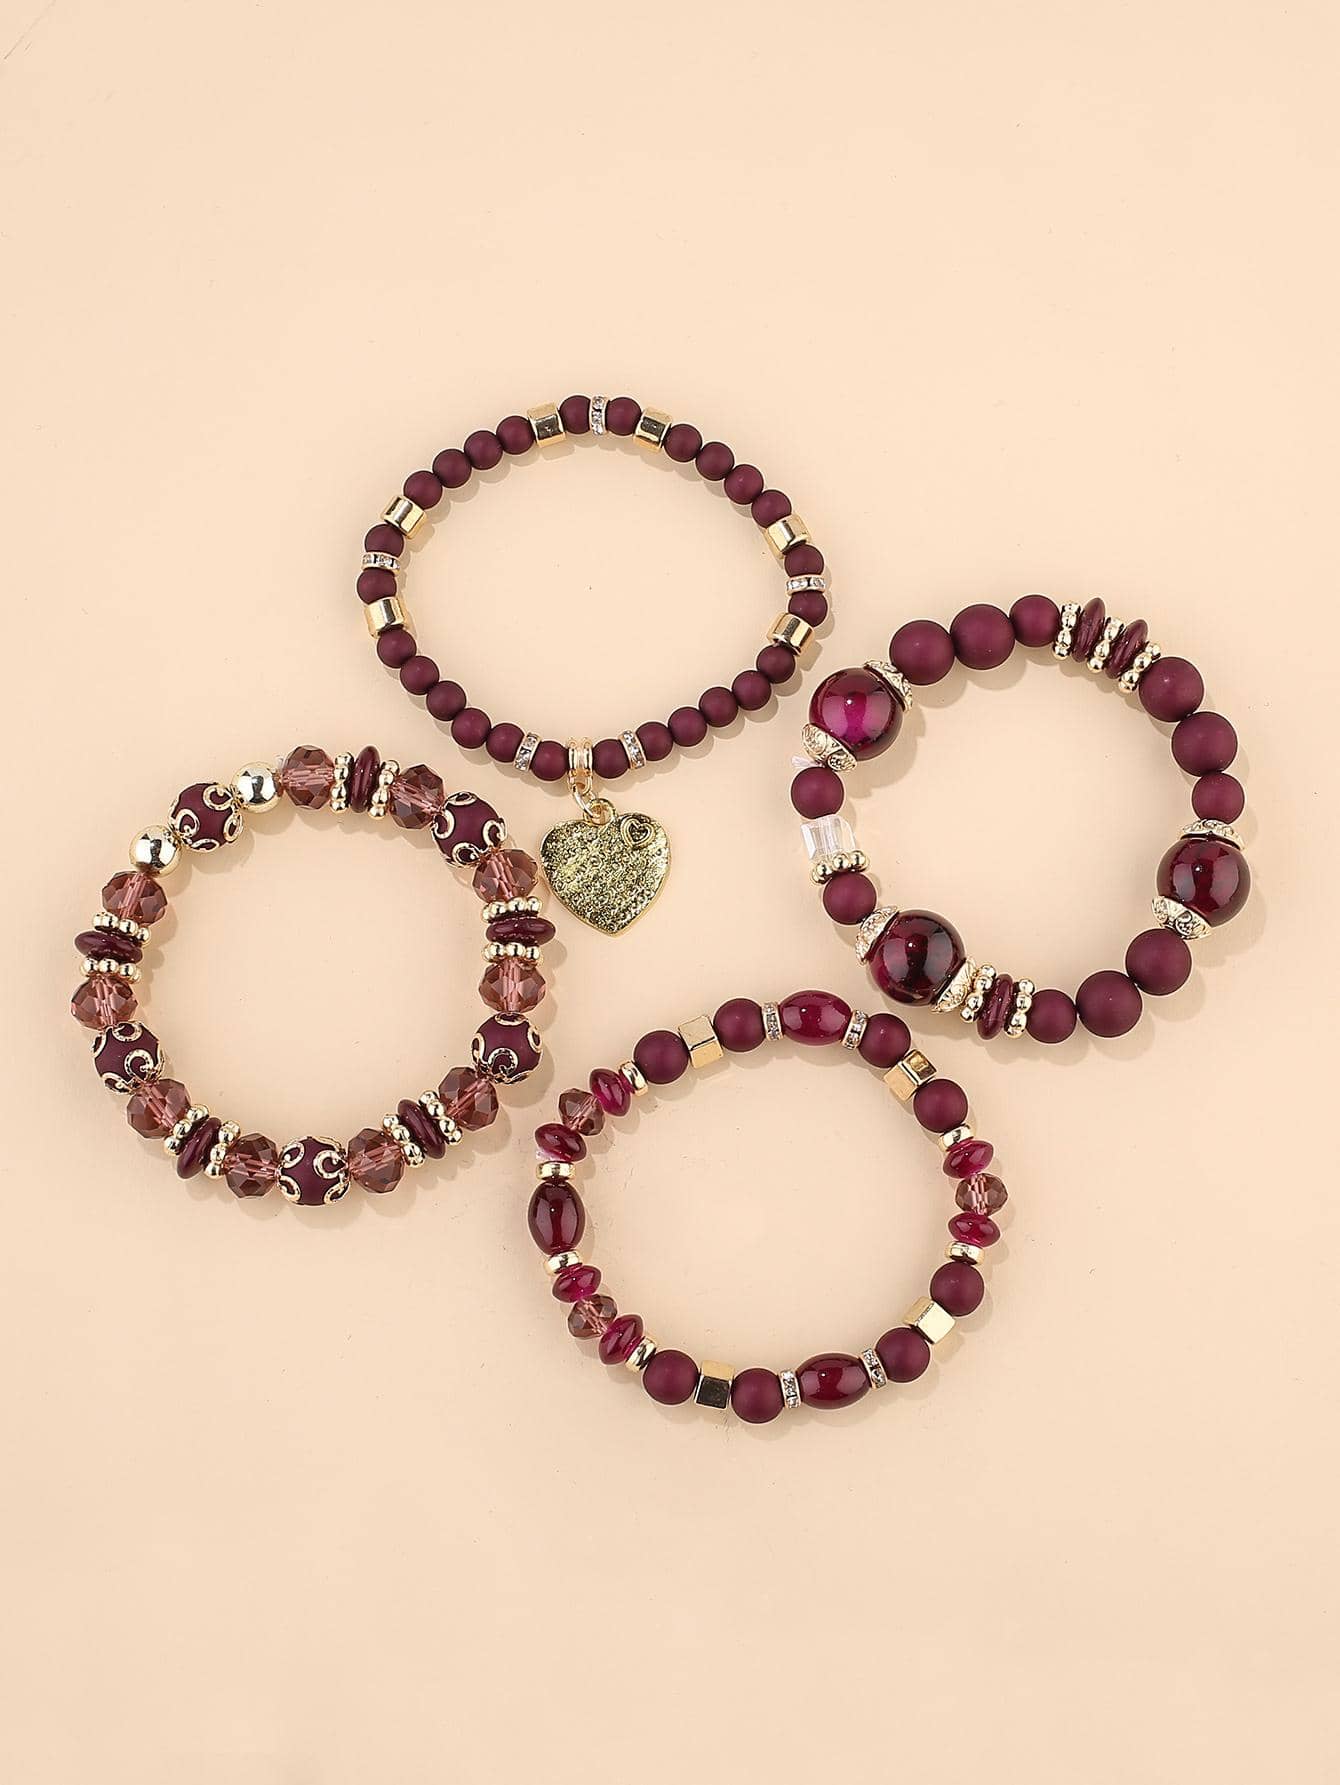 4 Piece Vintage Heart Shaped Pendant Bracelets set